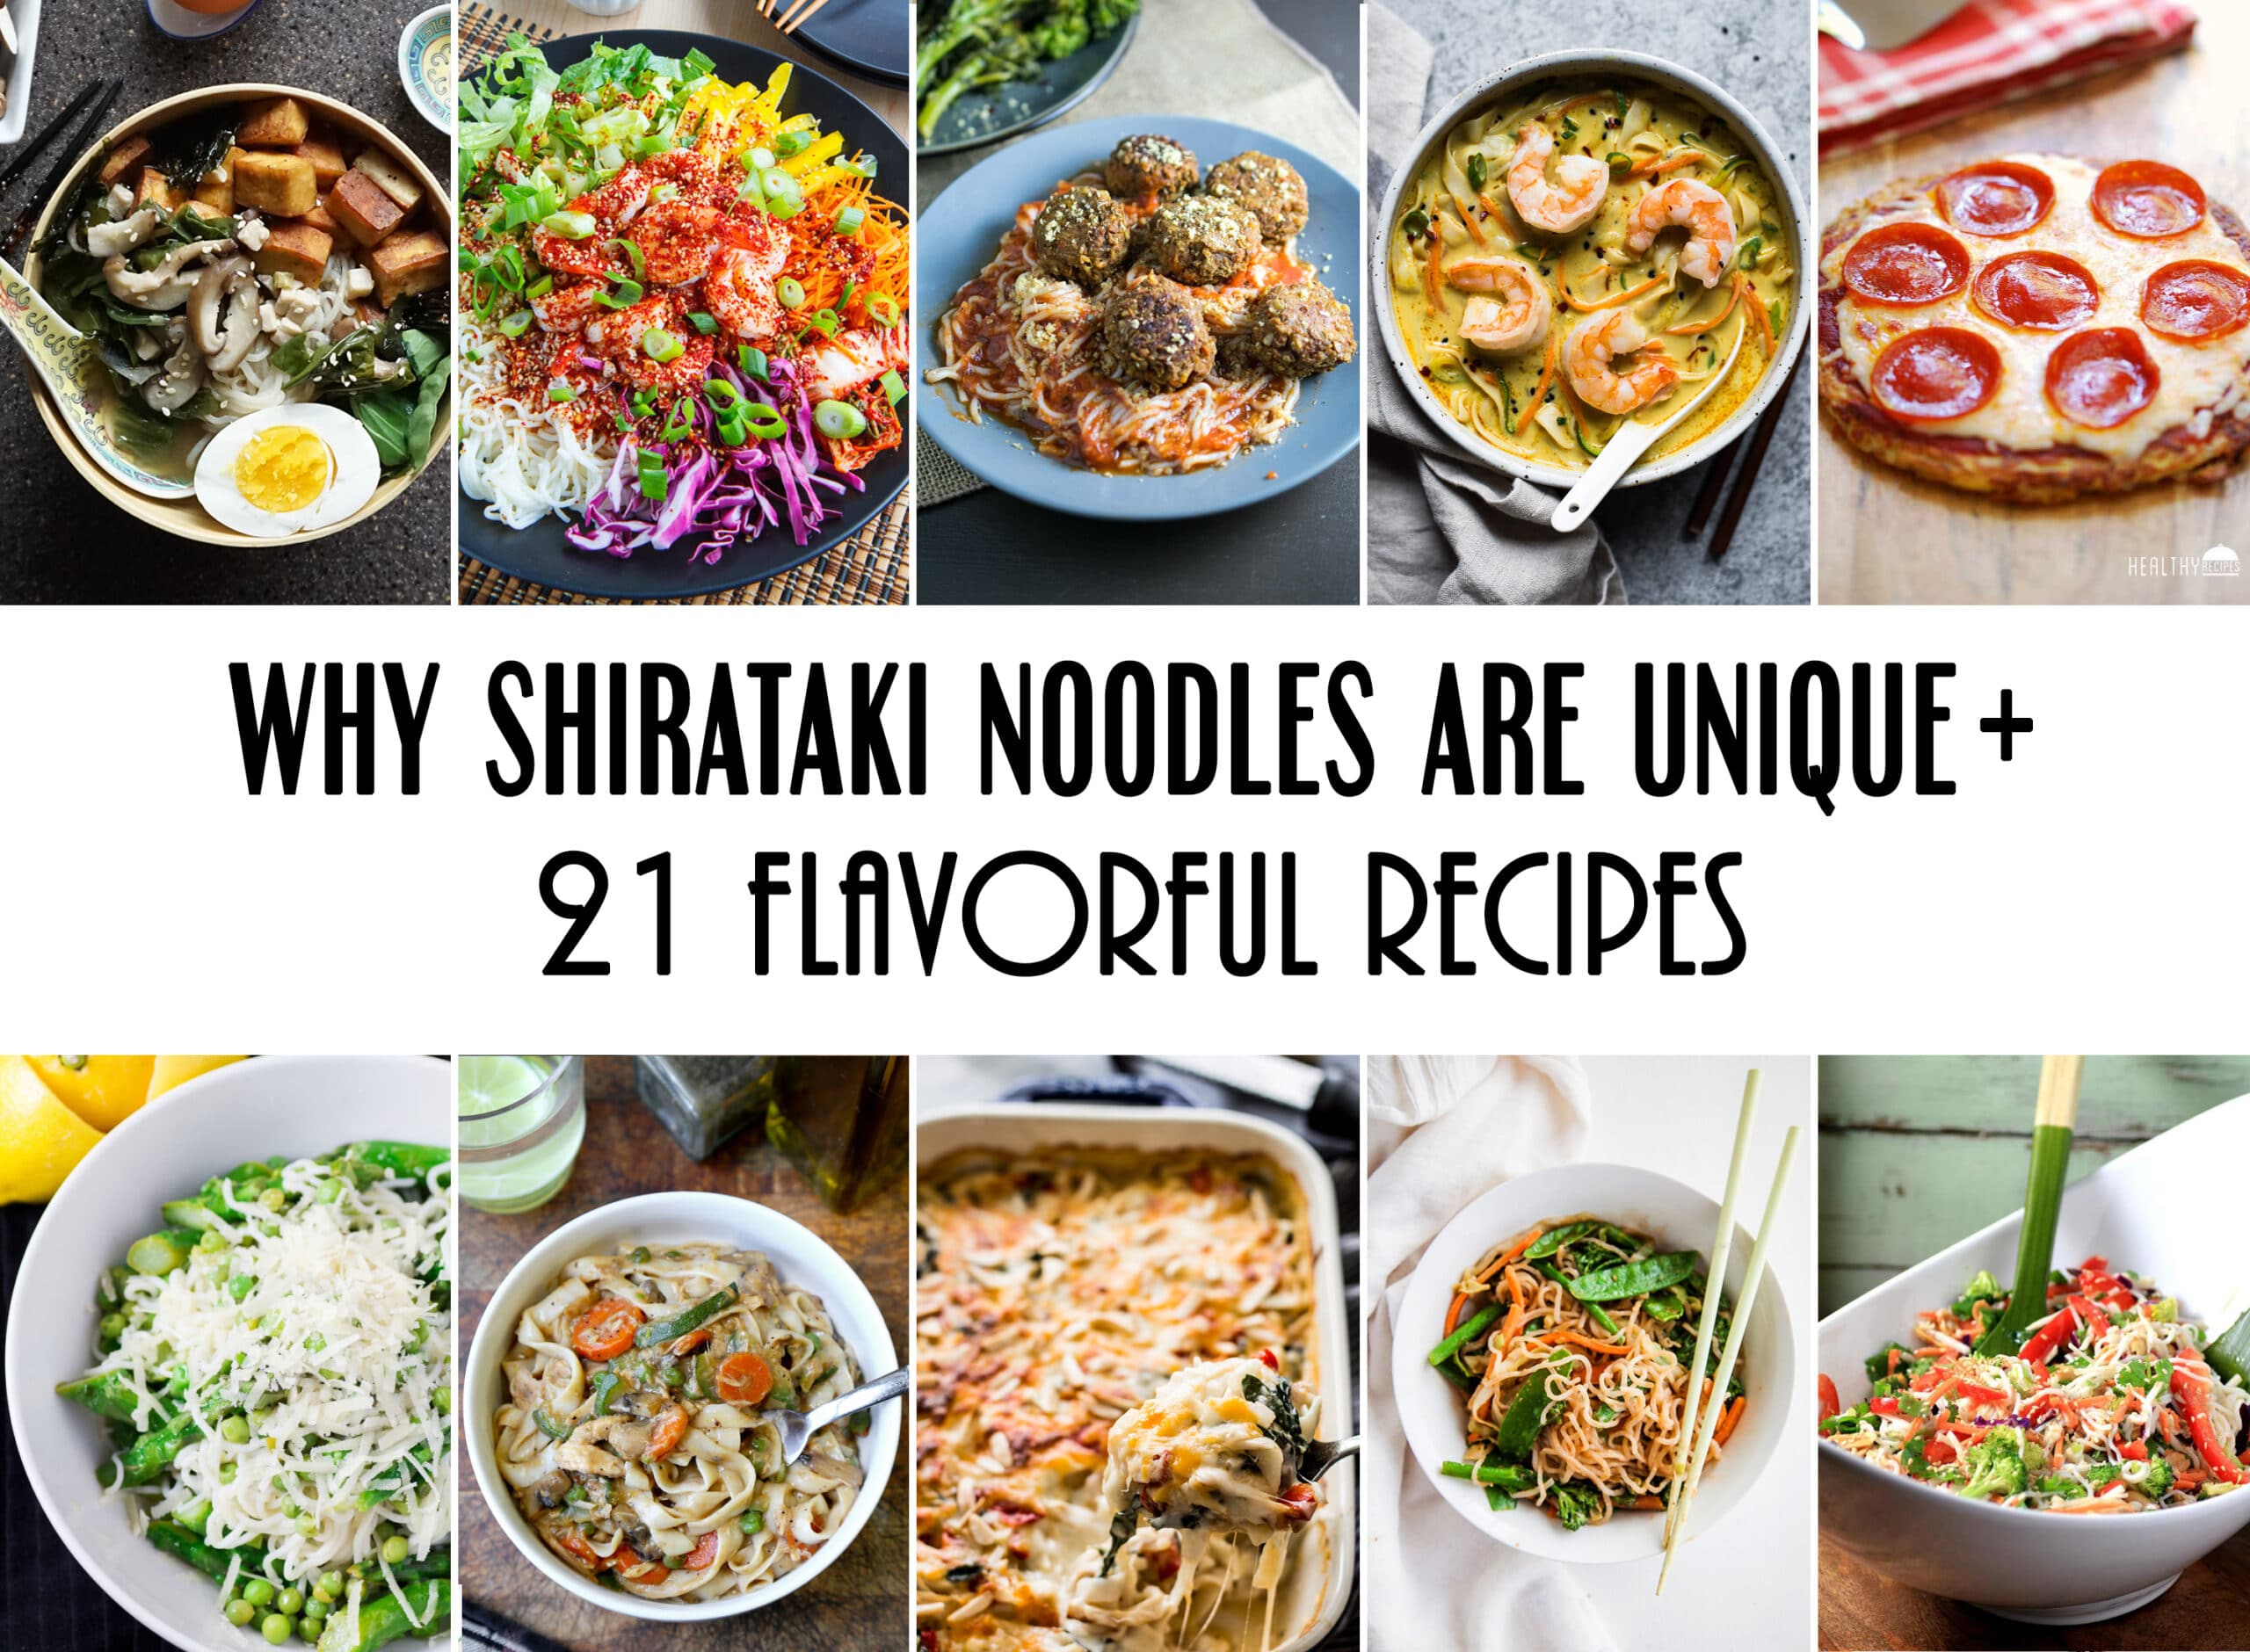 21 Shirataki Noodle Recipes to Enjoy This Zero-Calorie No-Carb Pasta